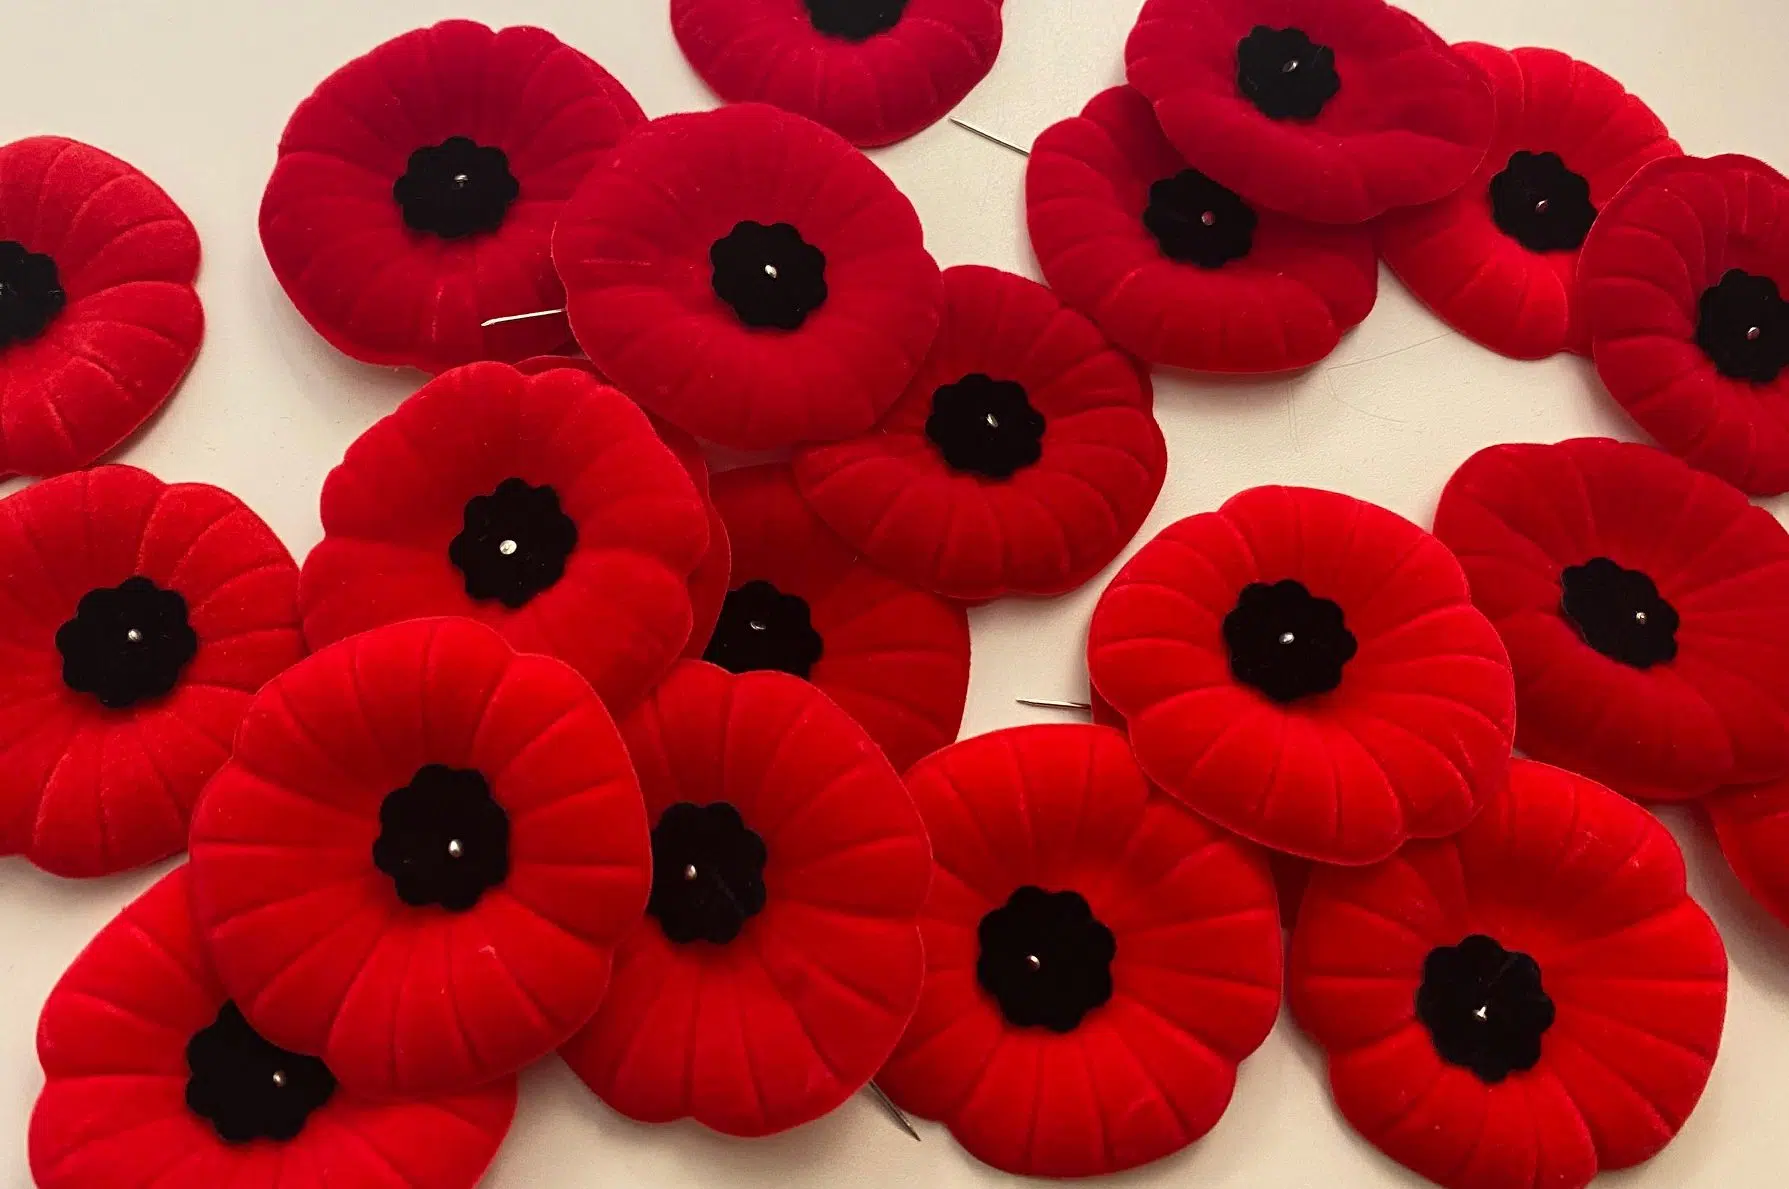 Royal Canadian Legion’s Poppy Campaign kicks off in Saskatchewan